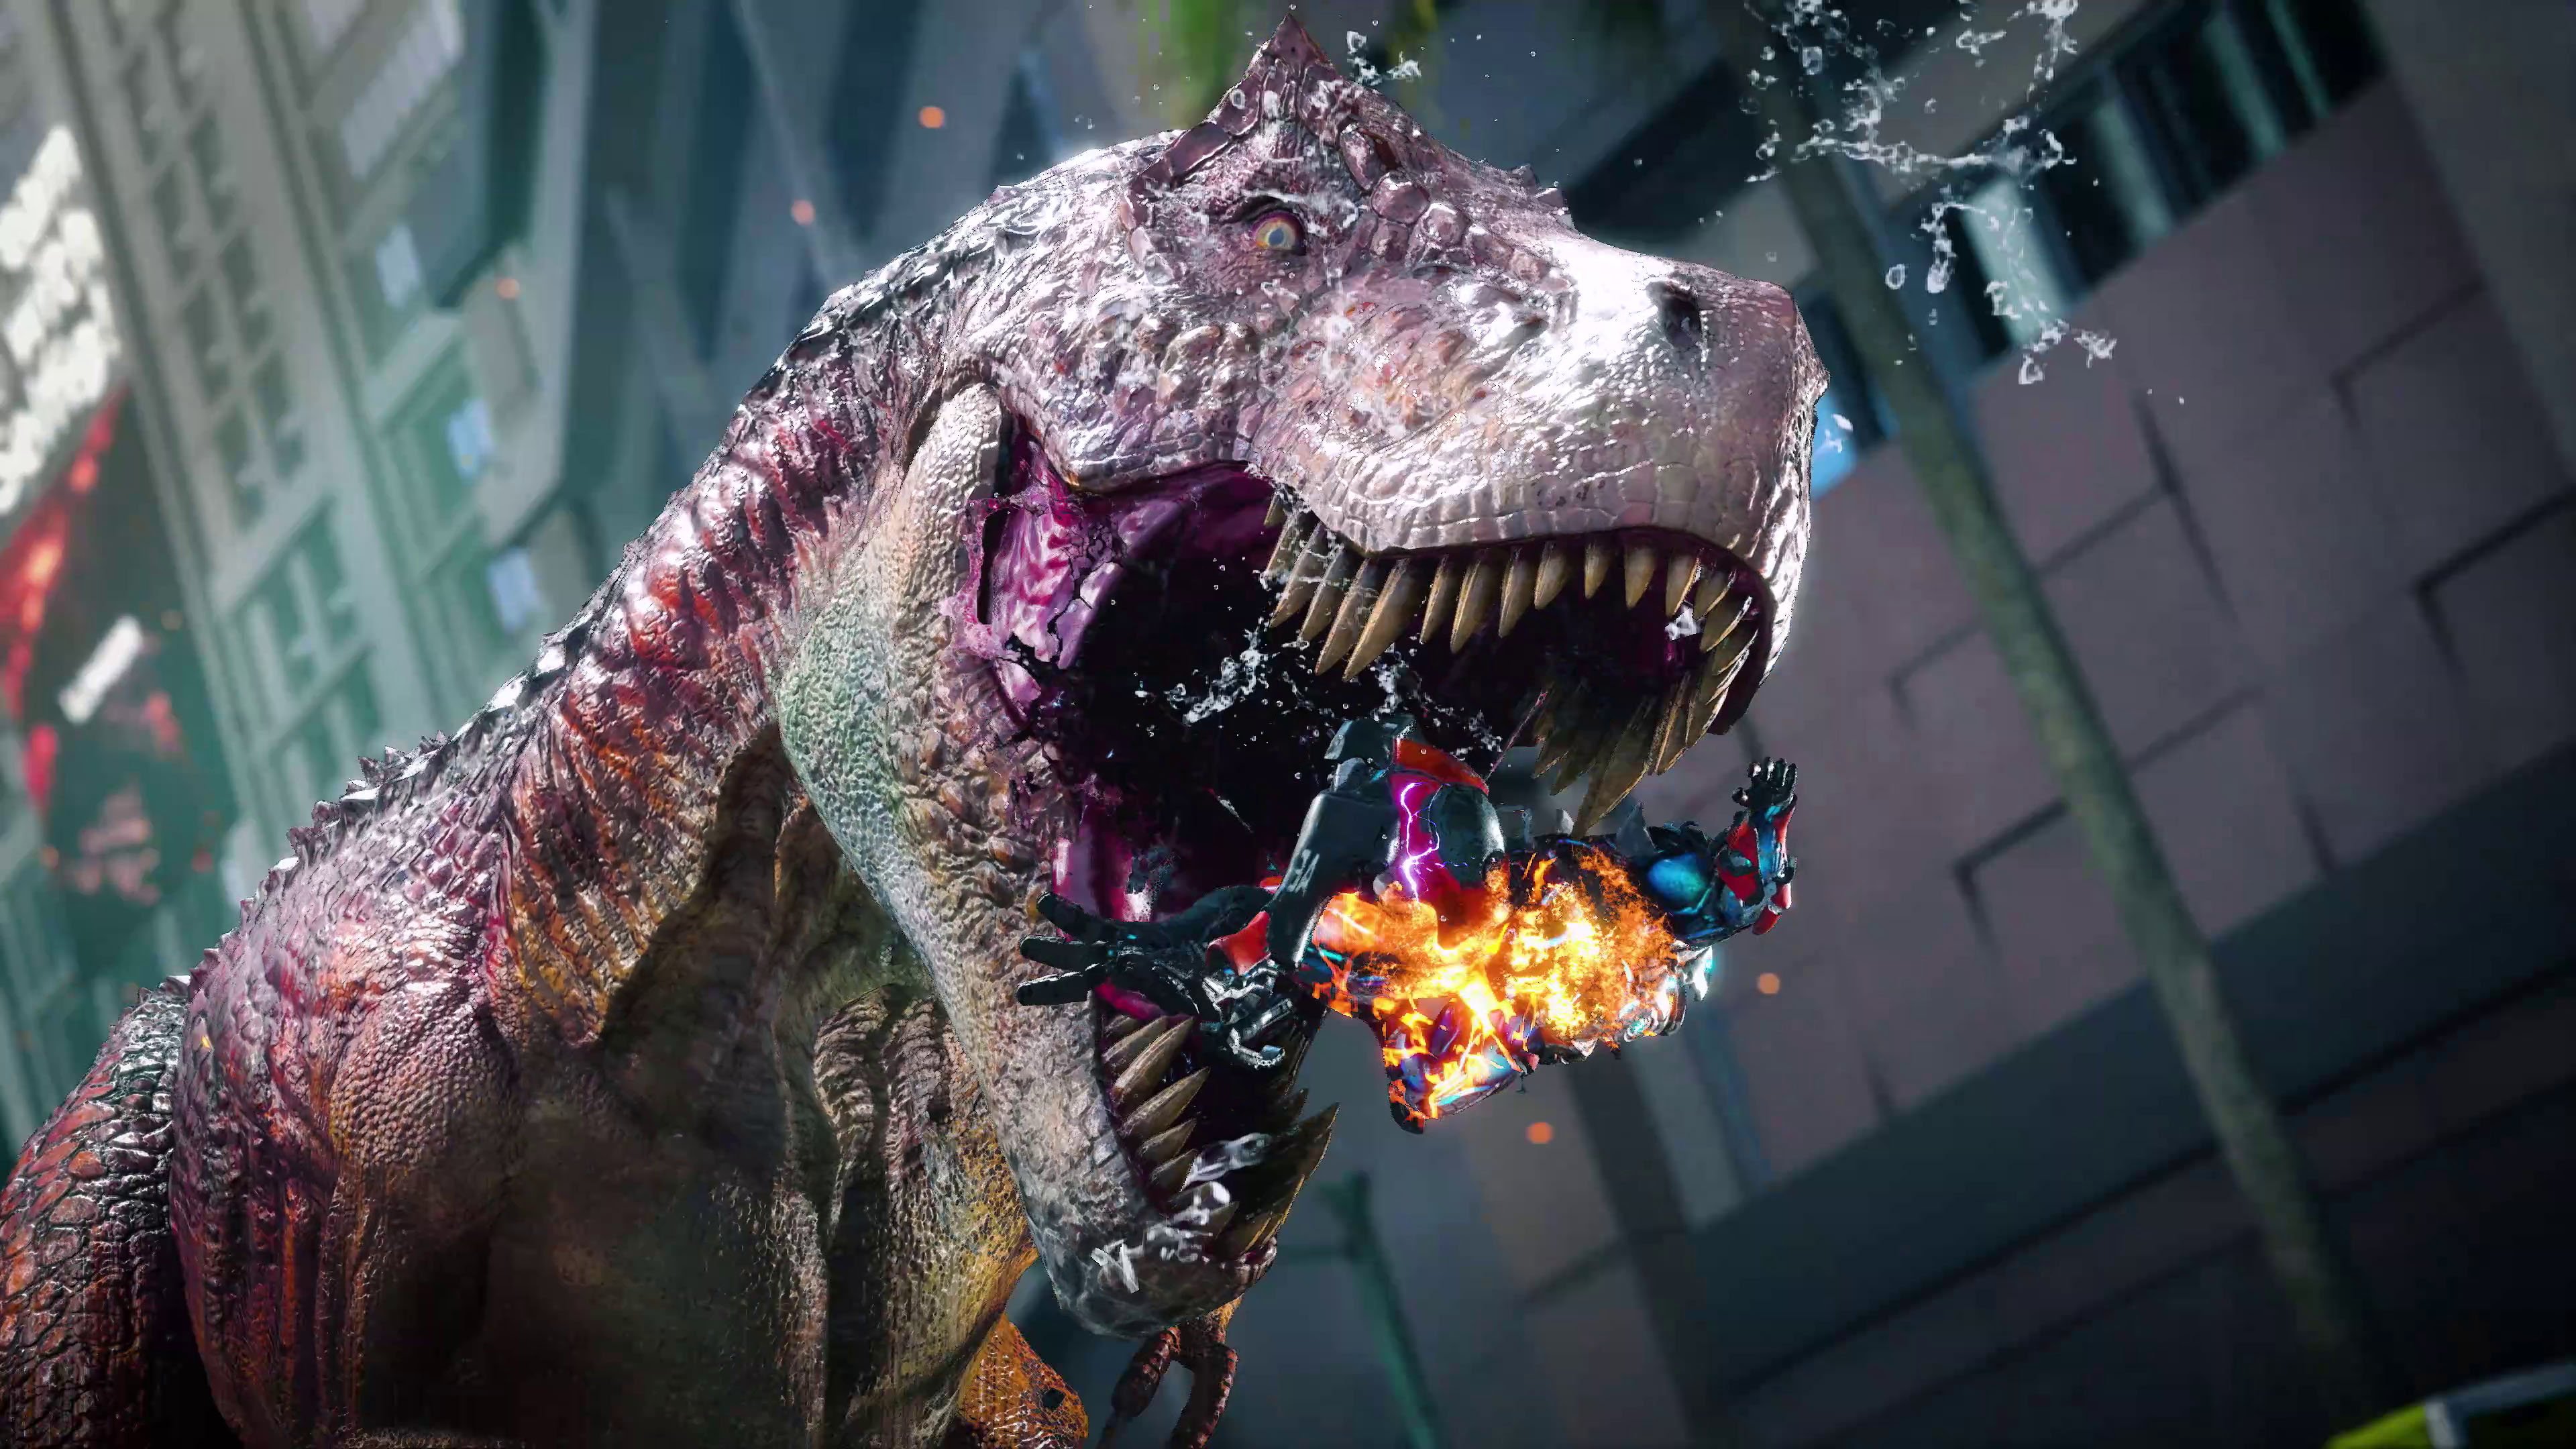 Exoprimal Is Capcom's New Dinosaur Game (Not Dino Crisis)